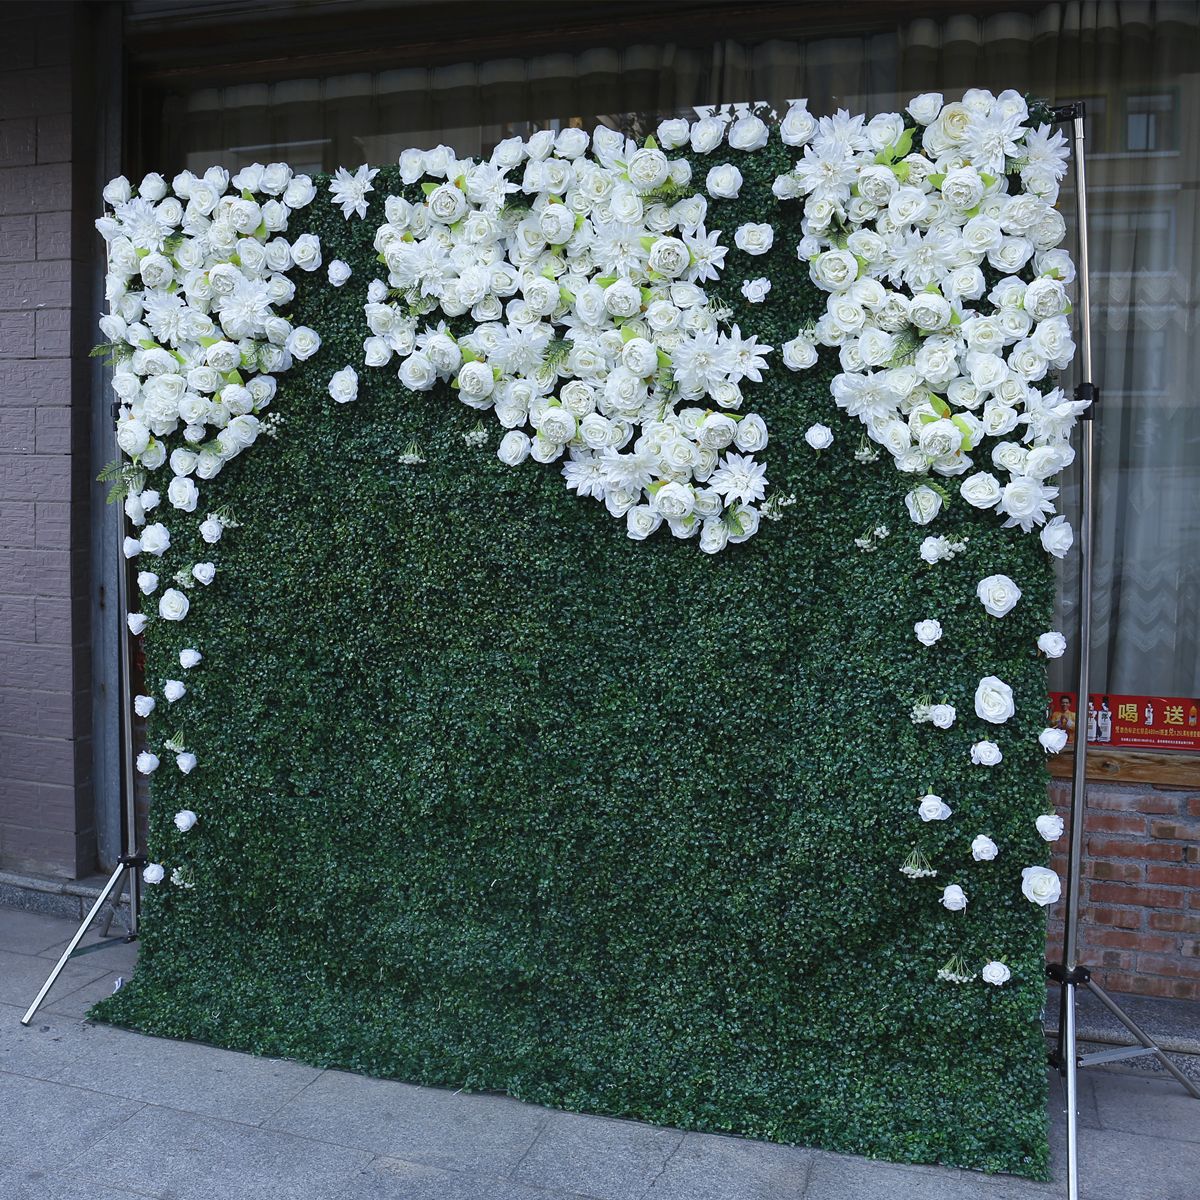 Tembok latar mburi tanduran ijo simulasi dekorasi pernikahan dekorasi pernikahan kain putih ing ngisor tembok kembang